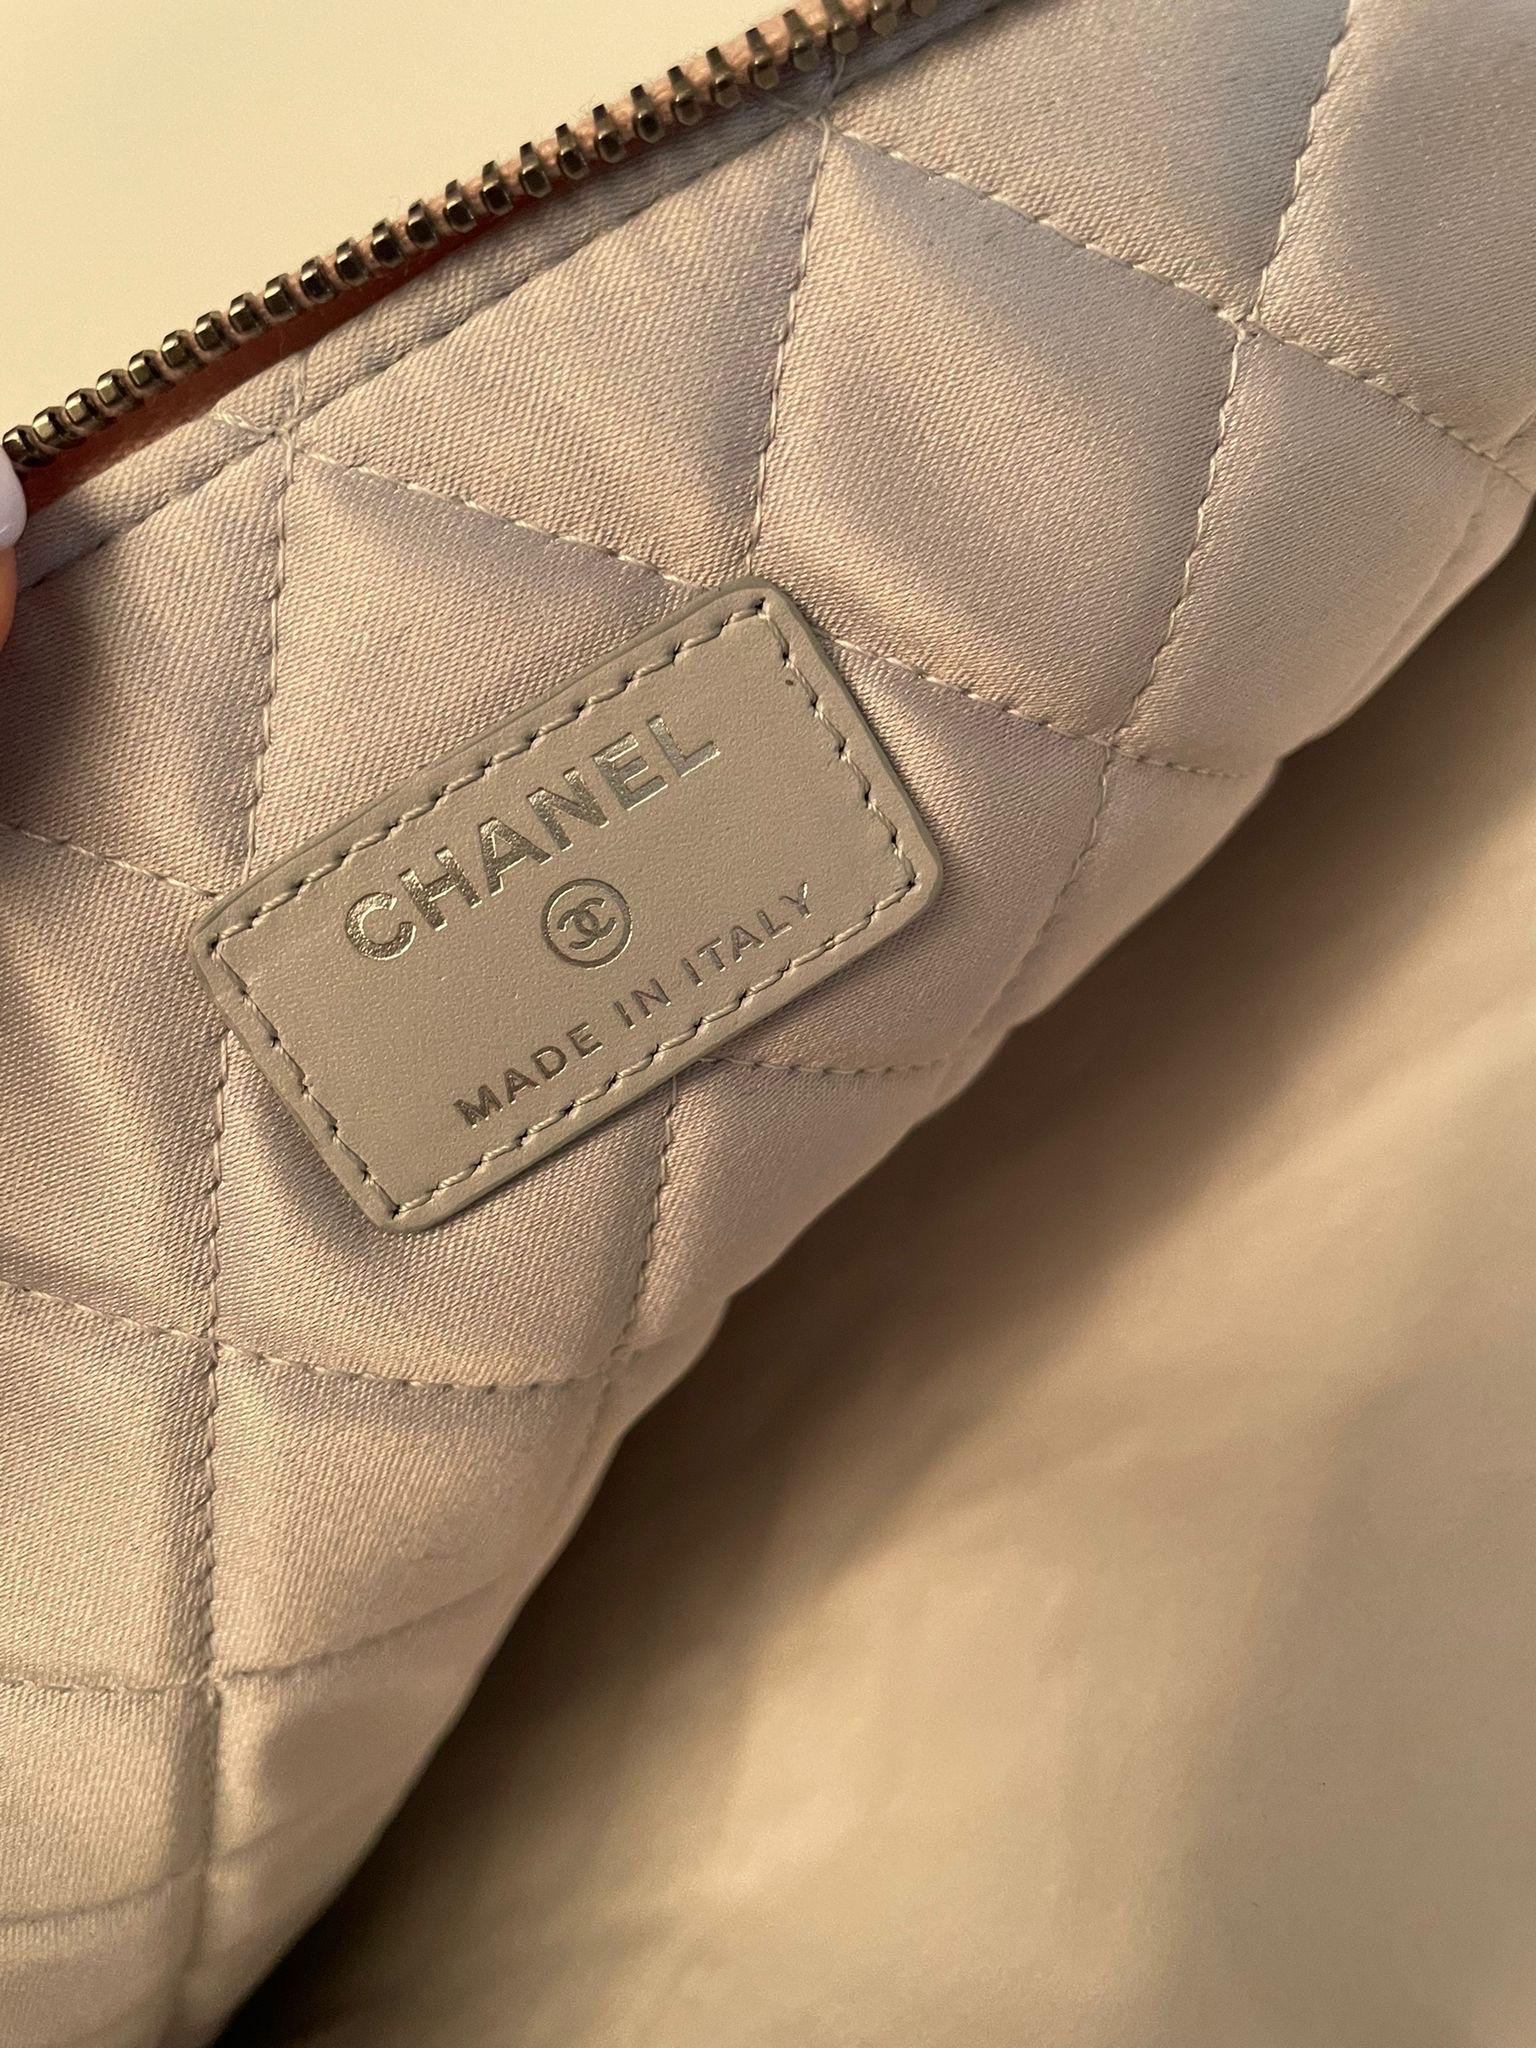 Chanel metallic pink clutch bag 2